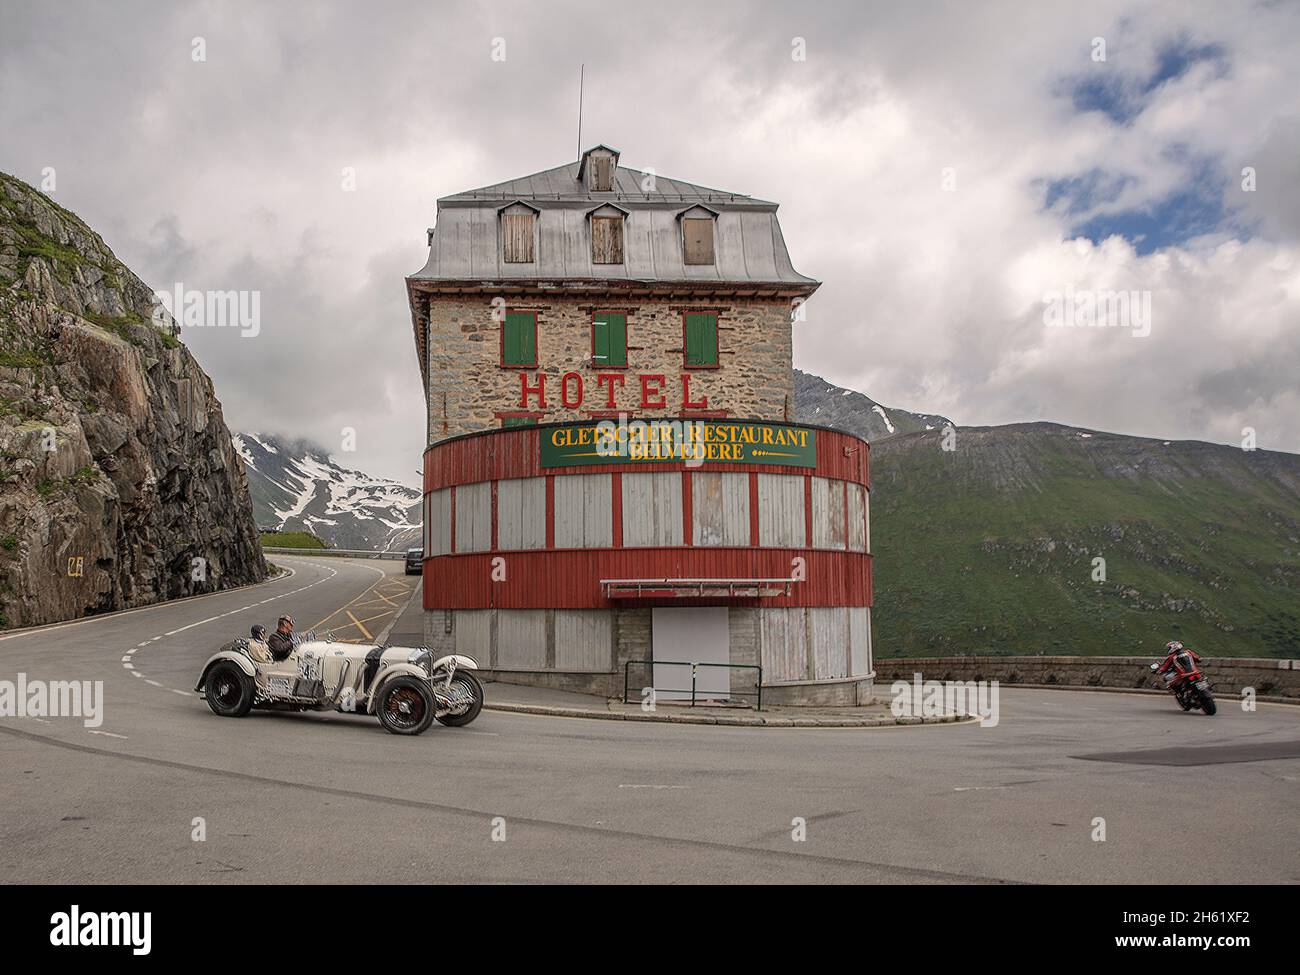 furka pass,hotel gletscher restaurant belvedere,vintage racing car,mercedes Stock Photo